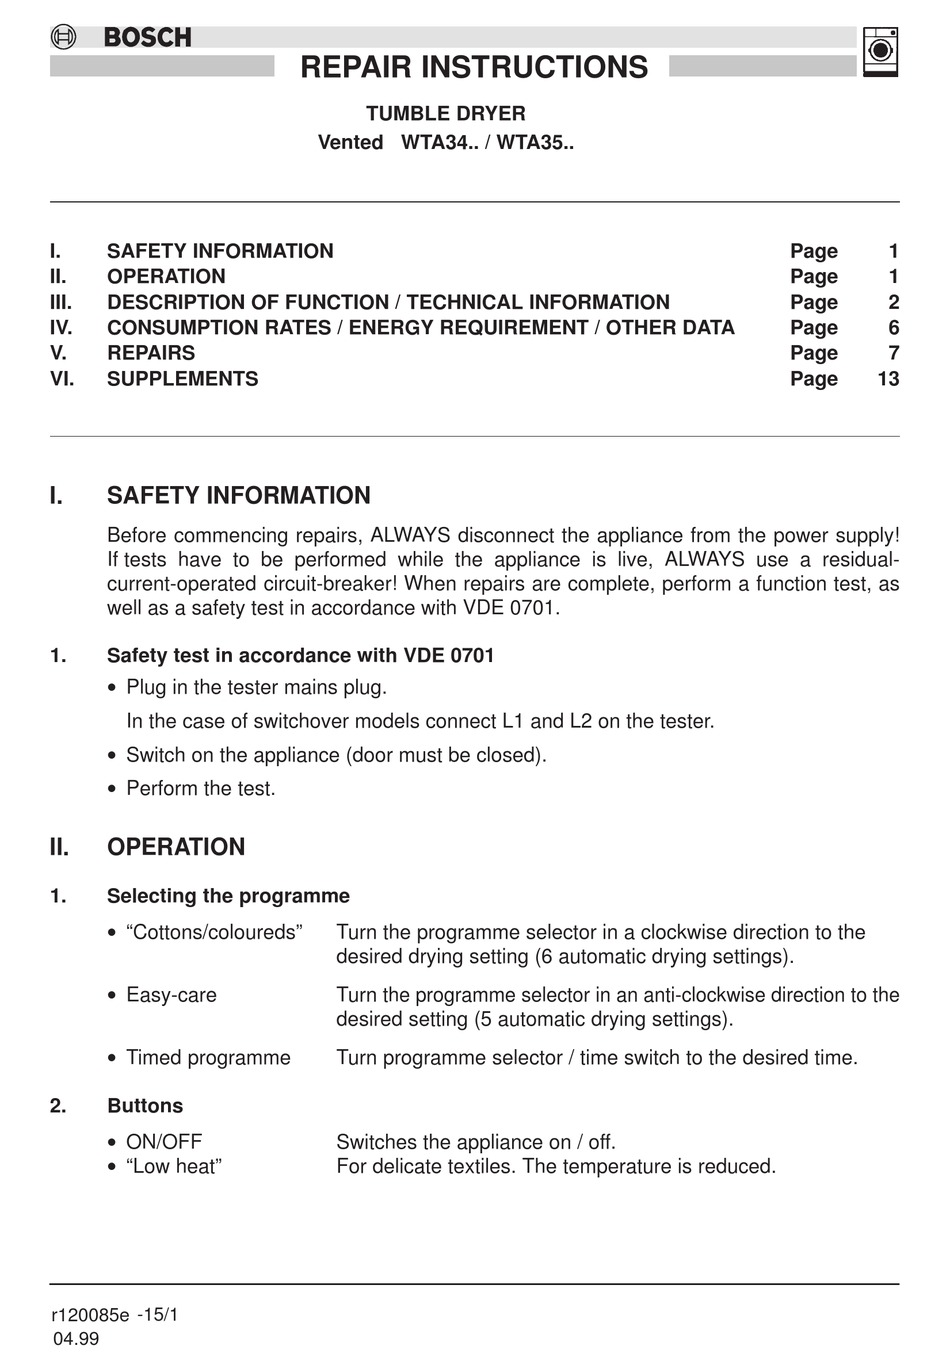 BOSCH WTA34 DRYER INSTRUCTIONS ManualsLib